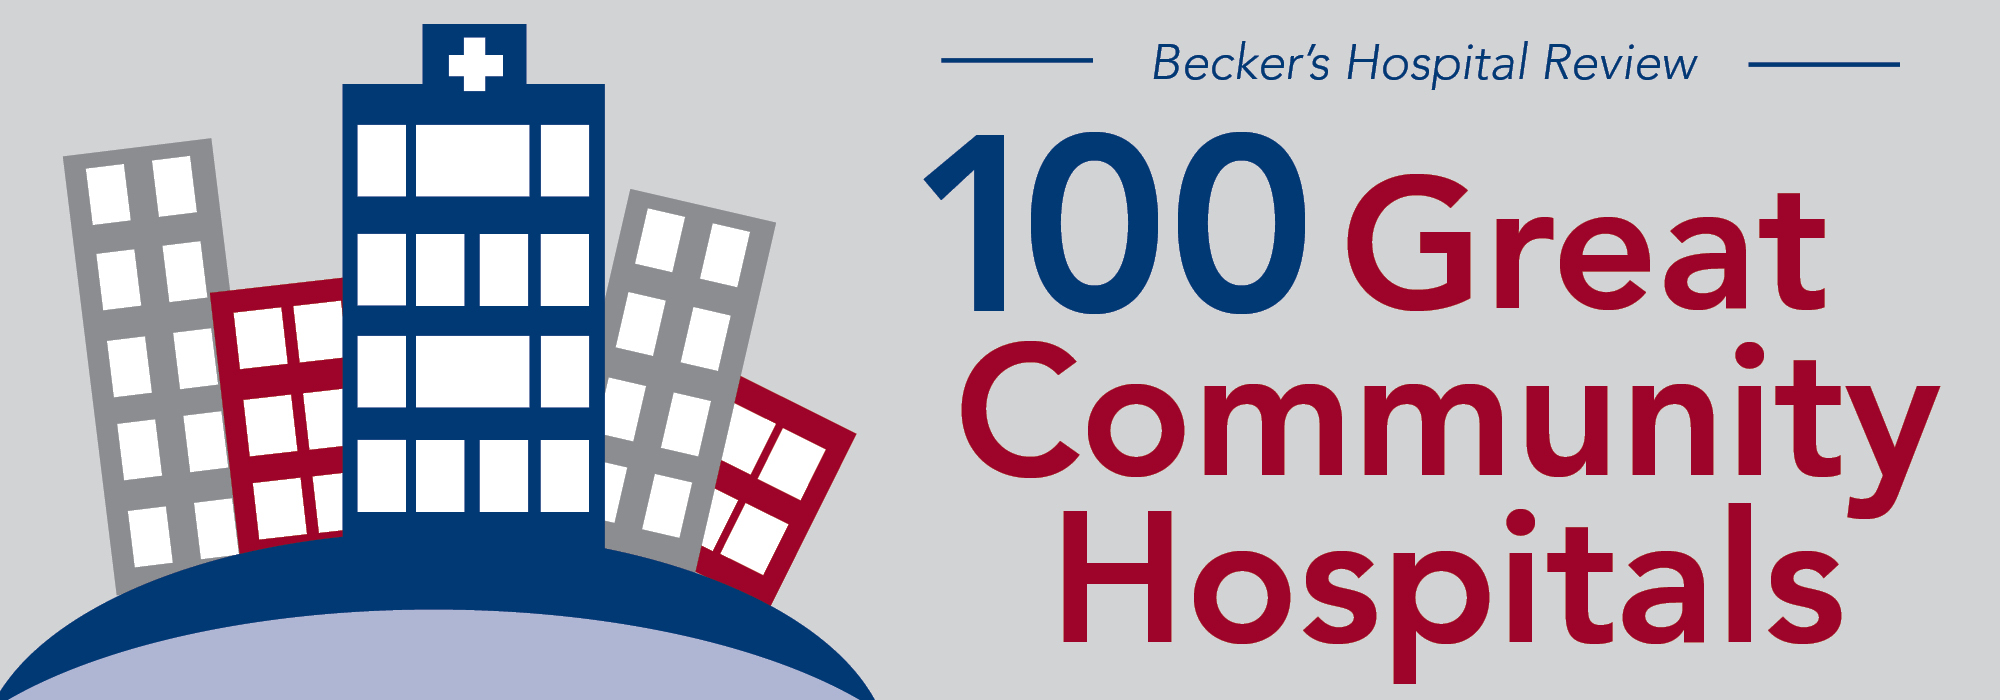 Great Community Hospitals 2017 Logo